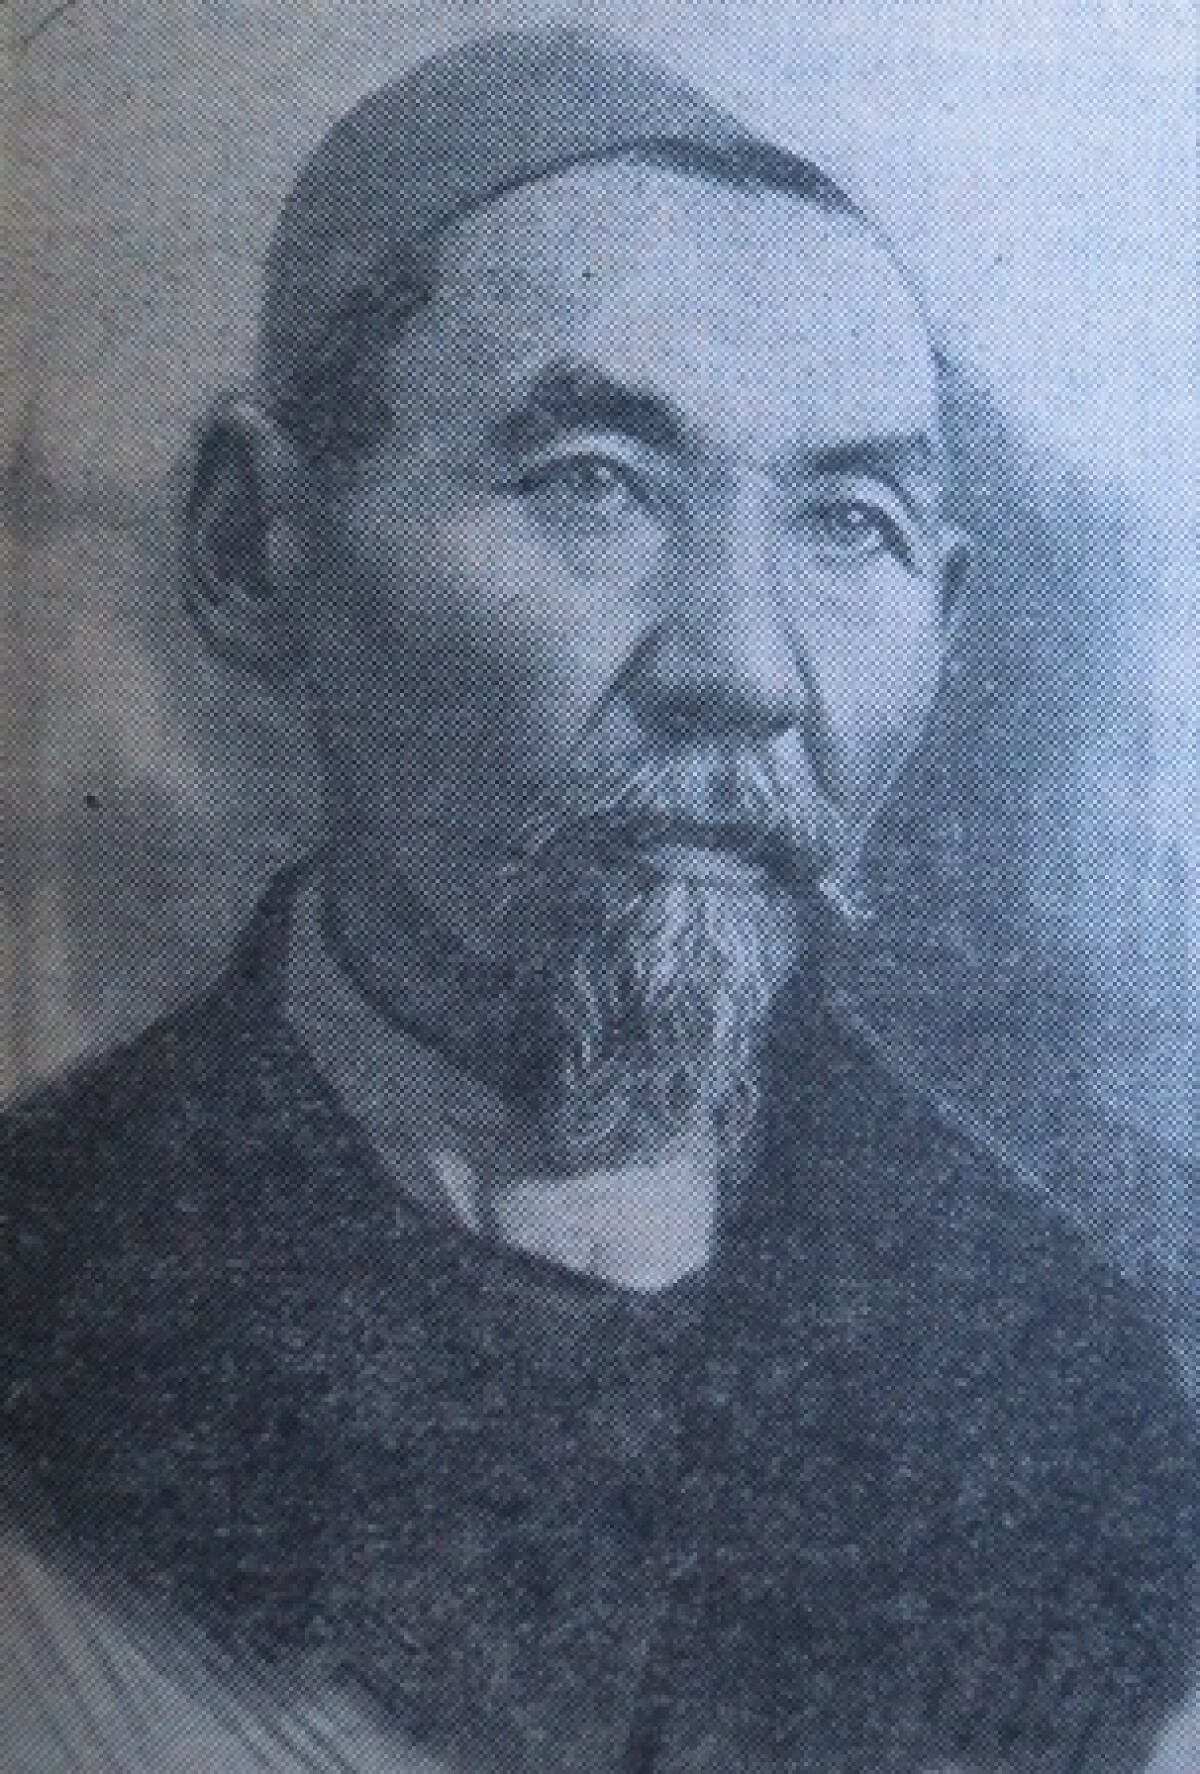 Berkimbayev Yestay 